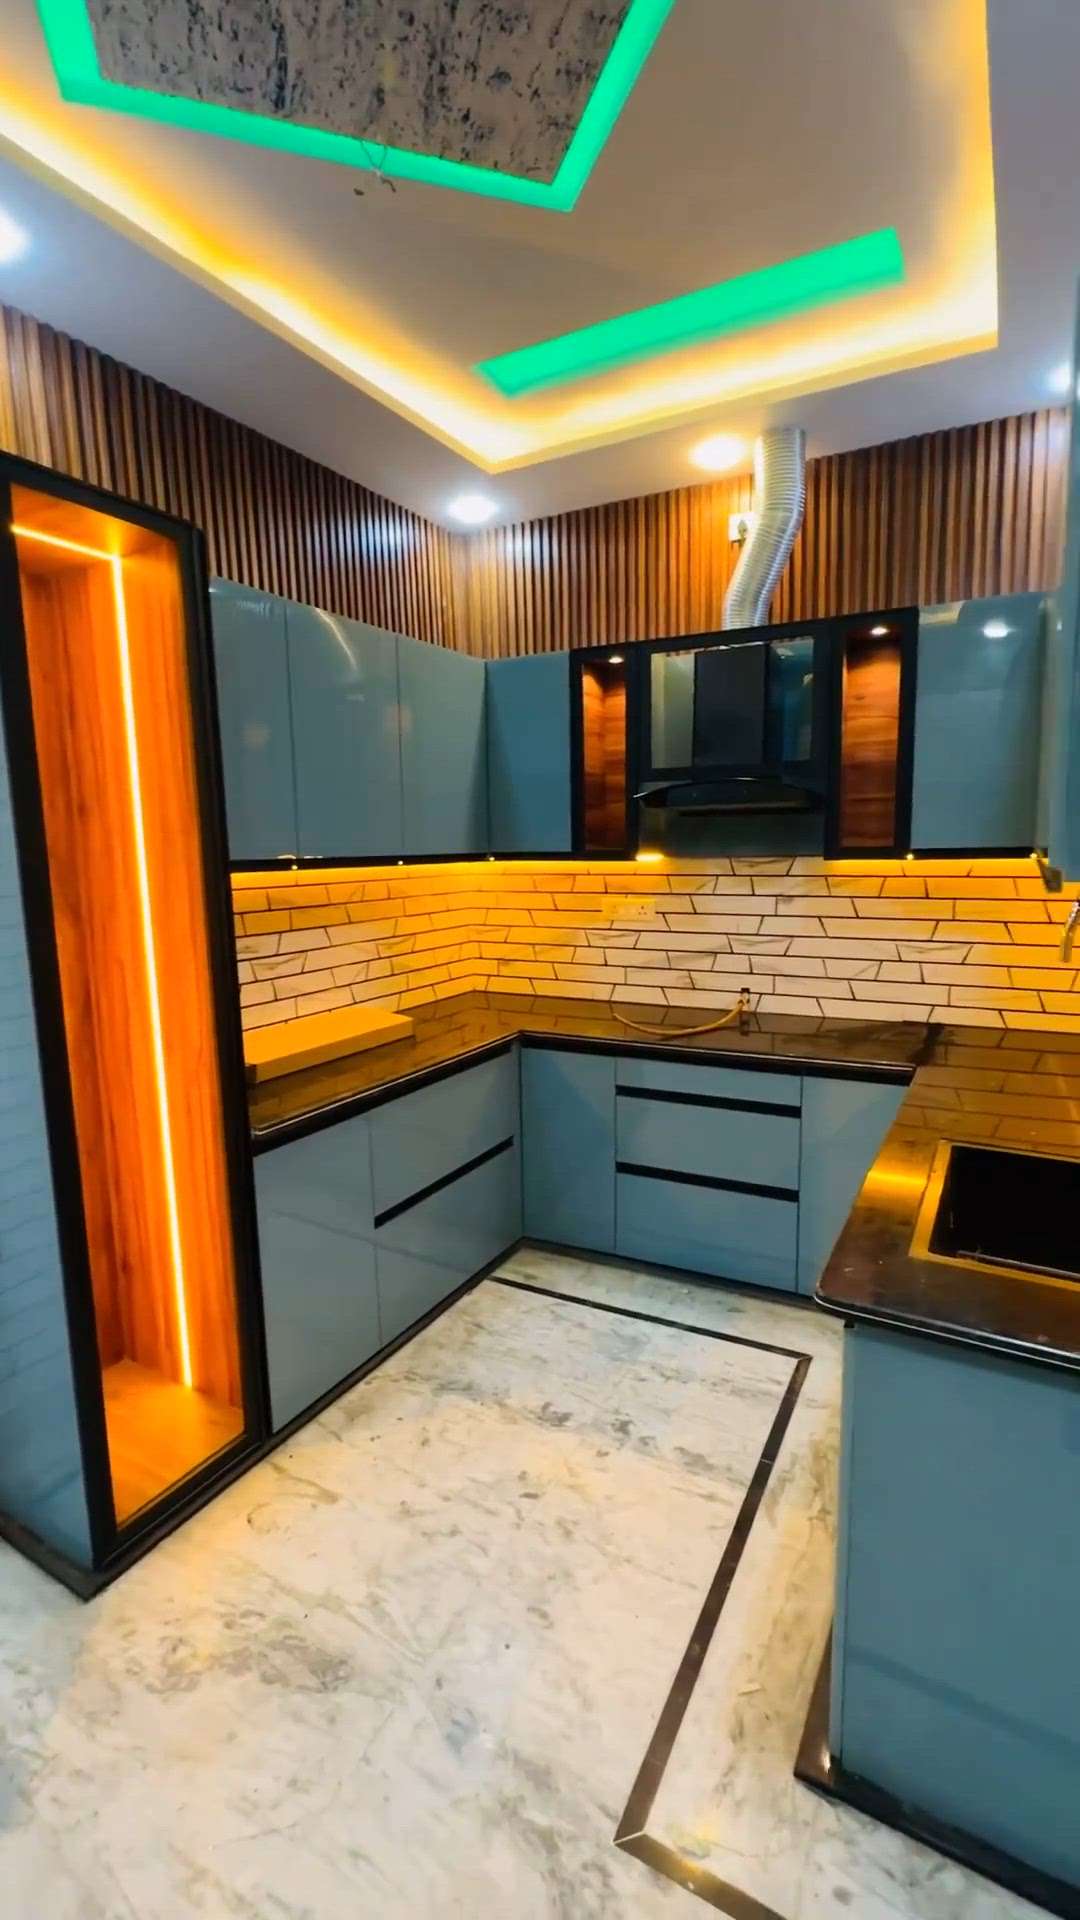 modular kitchen ask KoloApp rk carpenter  #ModularKitchen  #Modularfurniture  #kolopost  #koloapp  #ask  #askexperts